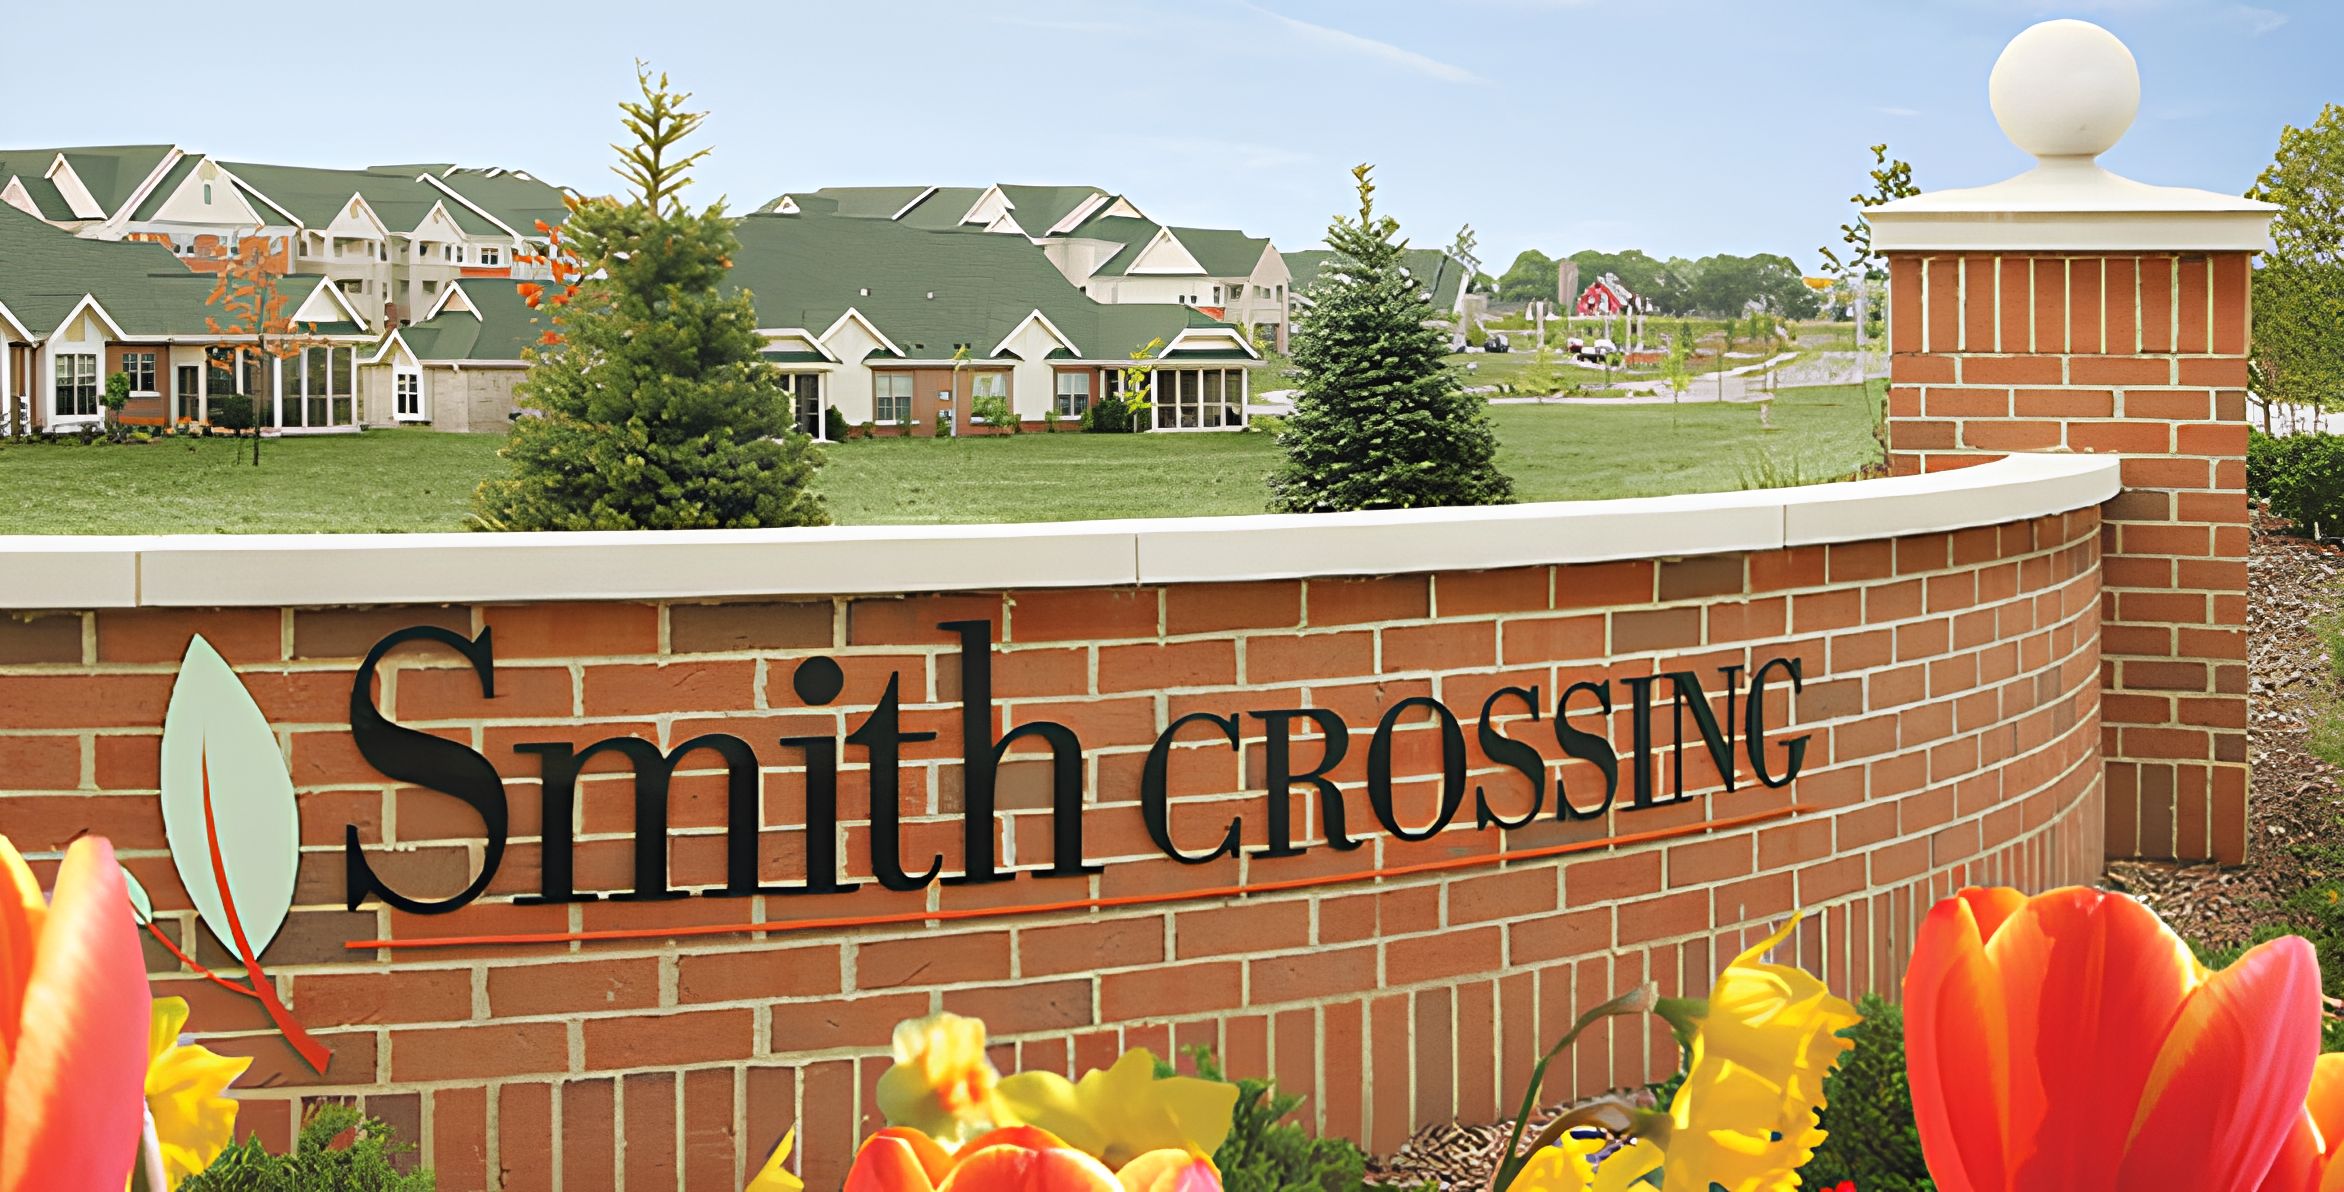 Smith Crossing 2